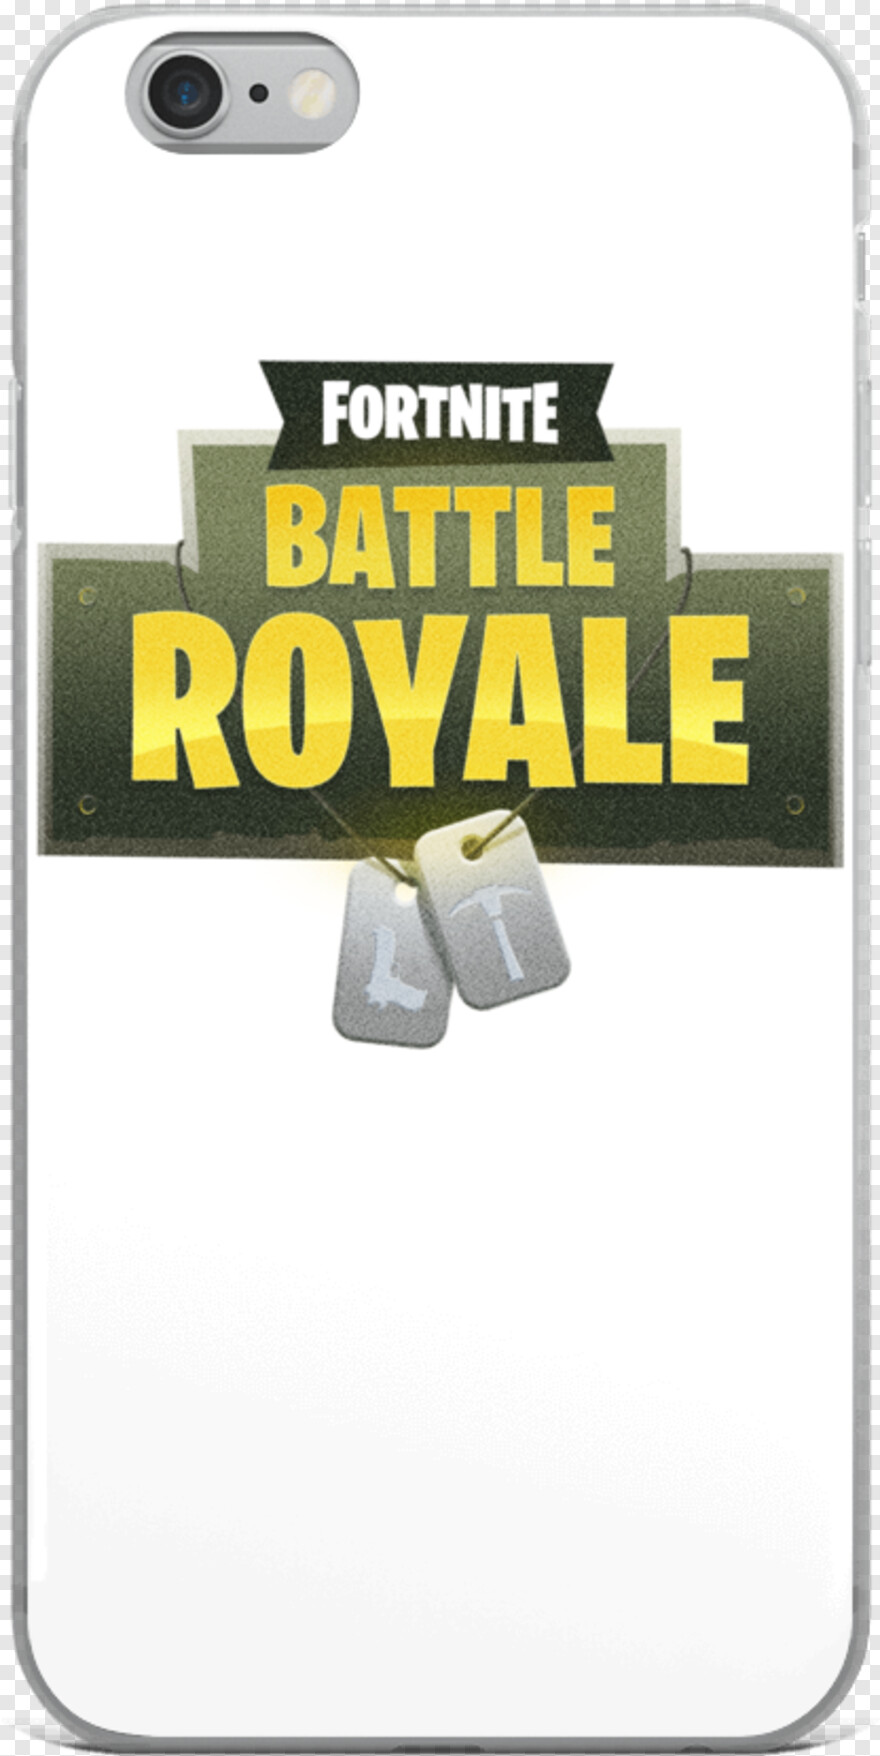  Fortnite, Fortnite Win, Fortnite Battle Royale, Fortnite Logo, Fortnite Battle Royale Logo, Fortnite Victory Royale